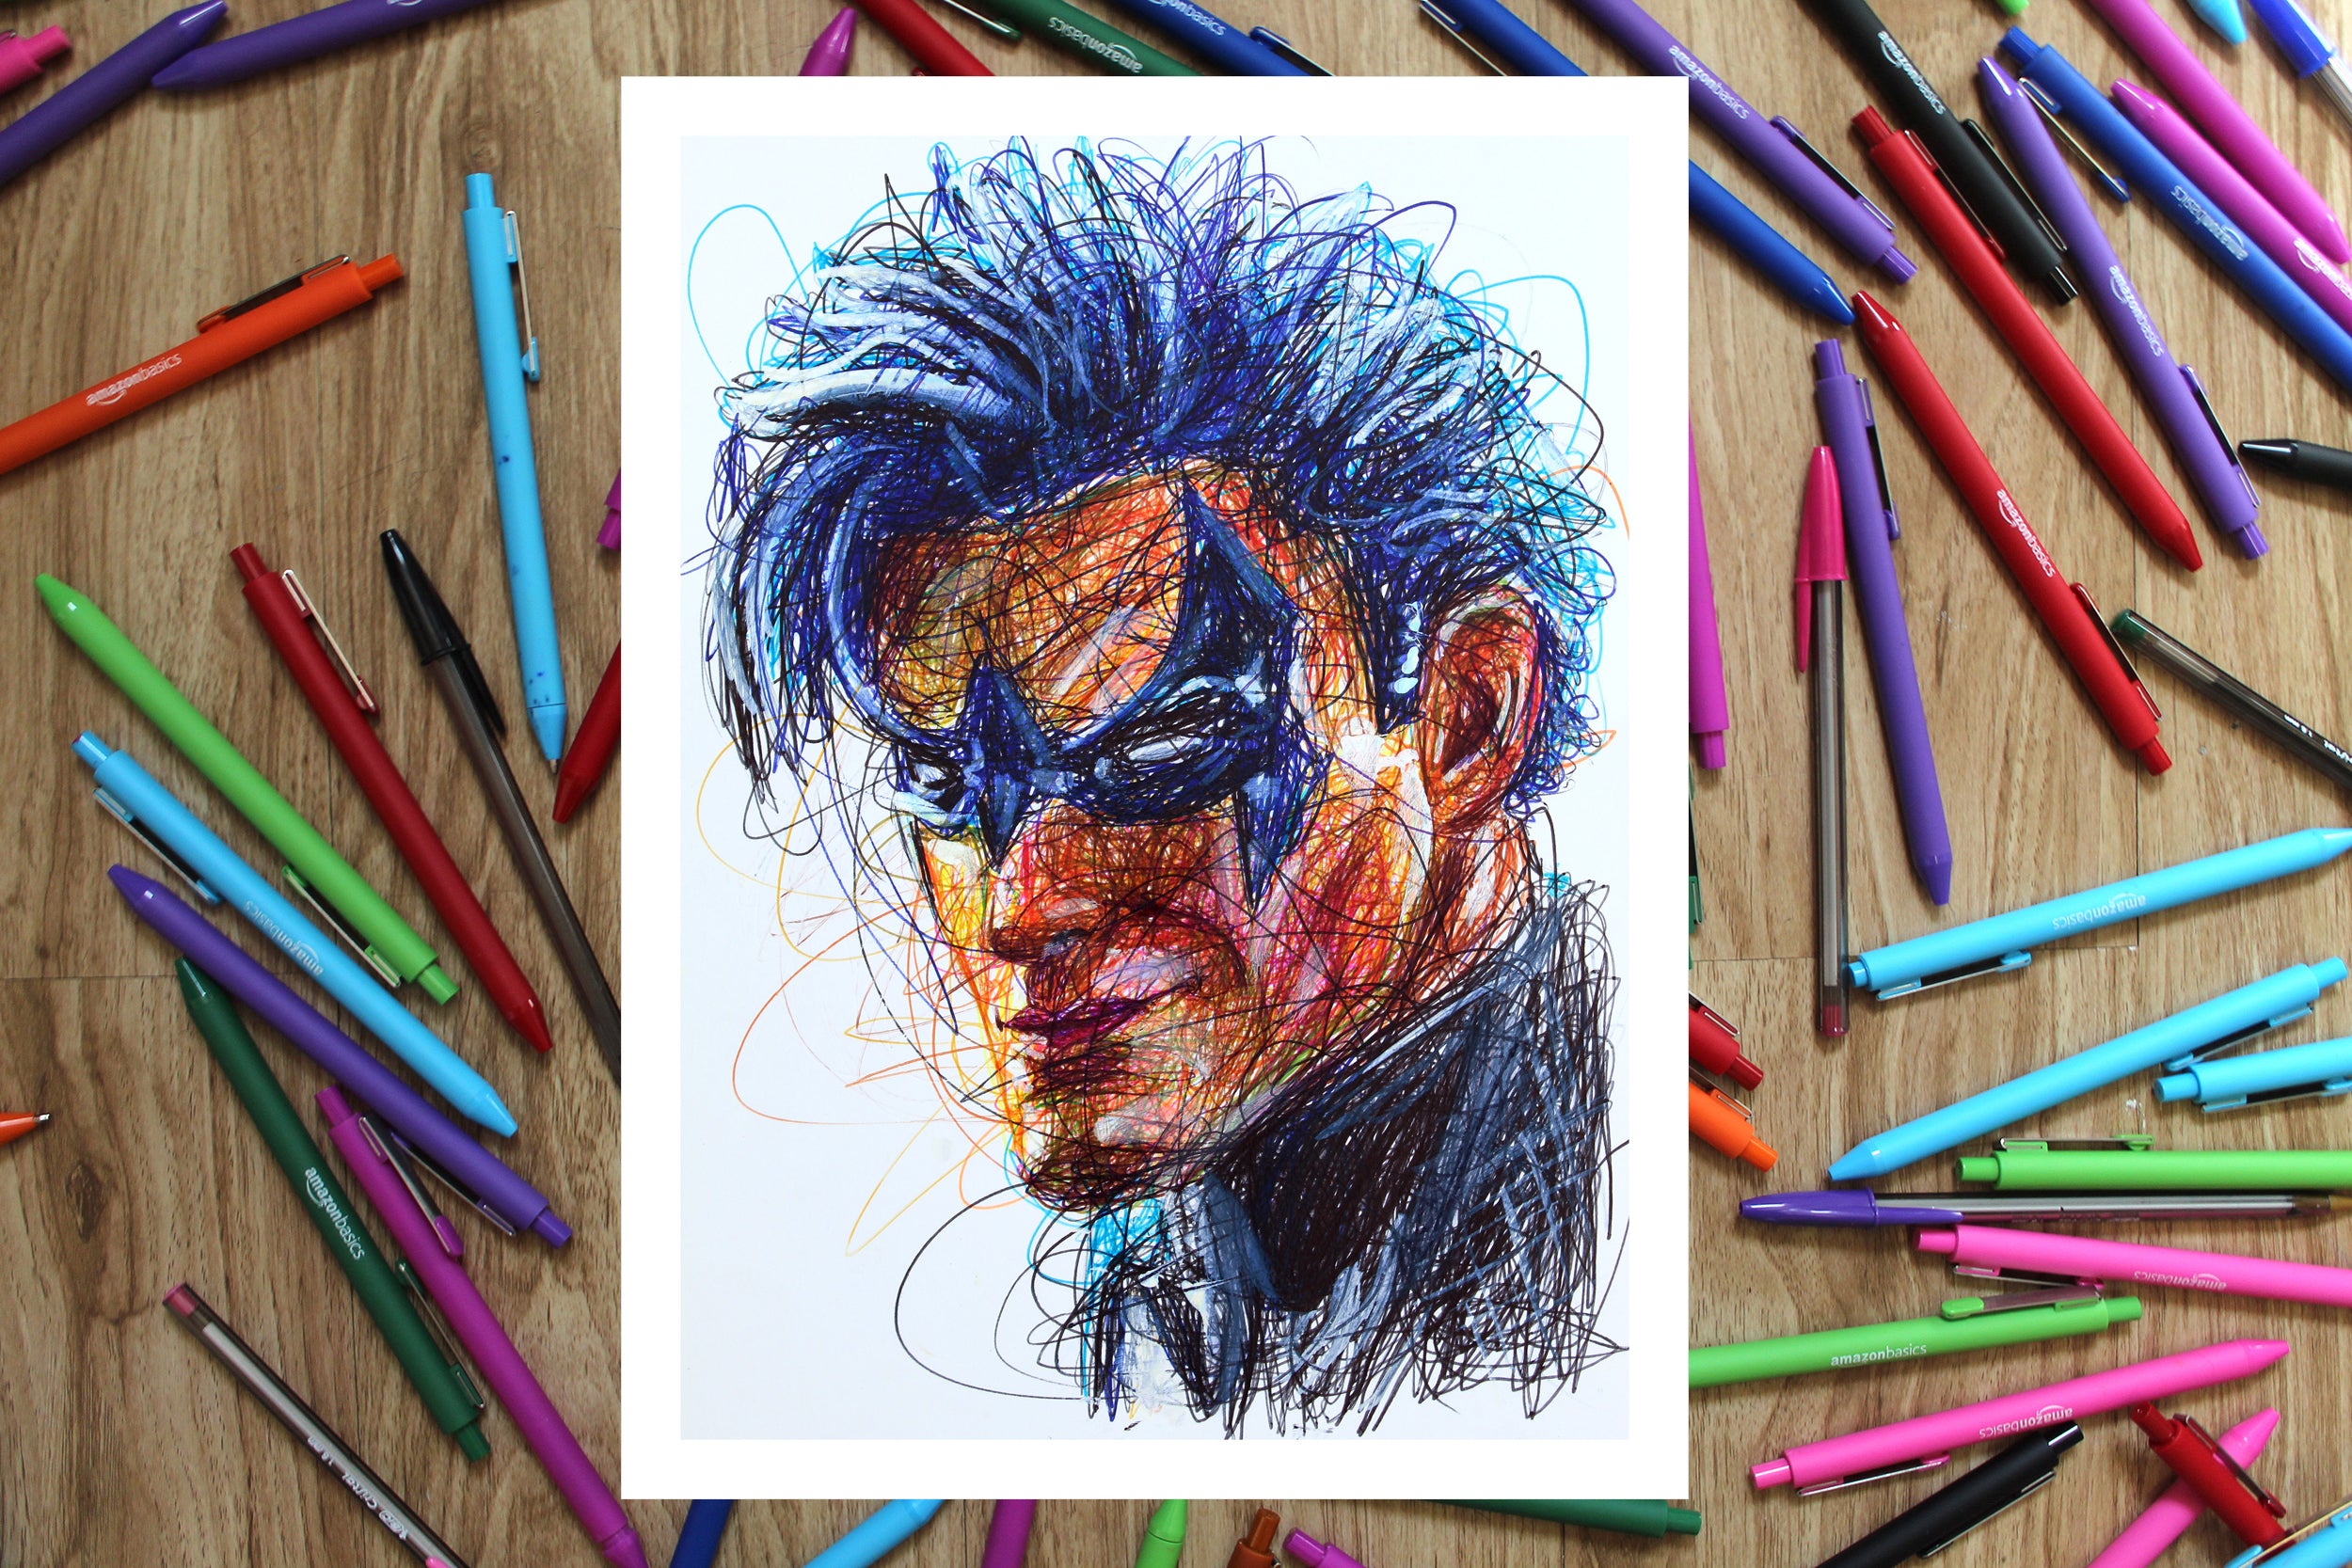 Draw a pencil sketch of any superhero by Aphronio | Fiverr